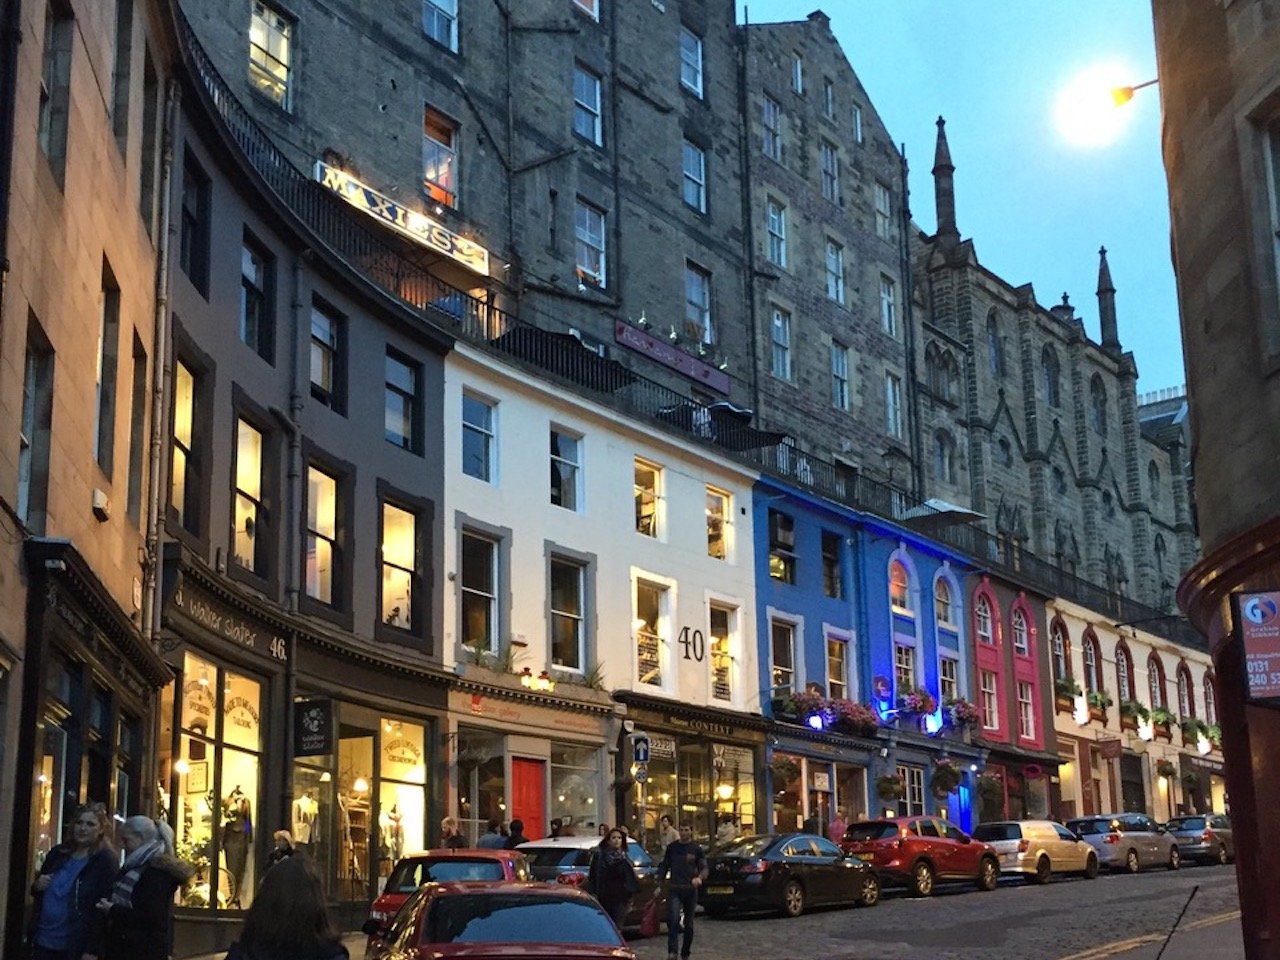 The curving streets of Edinburgh